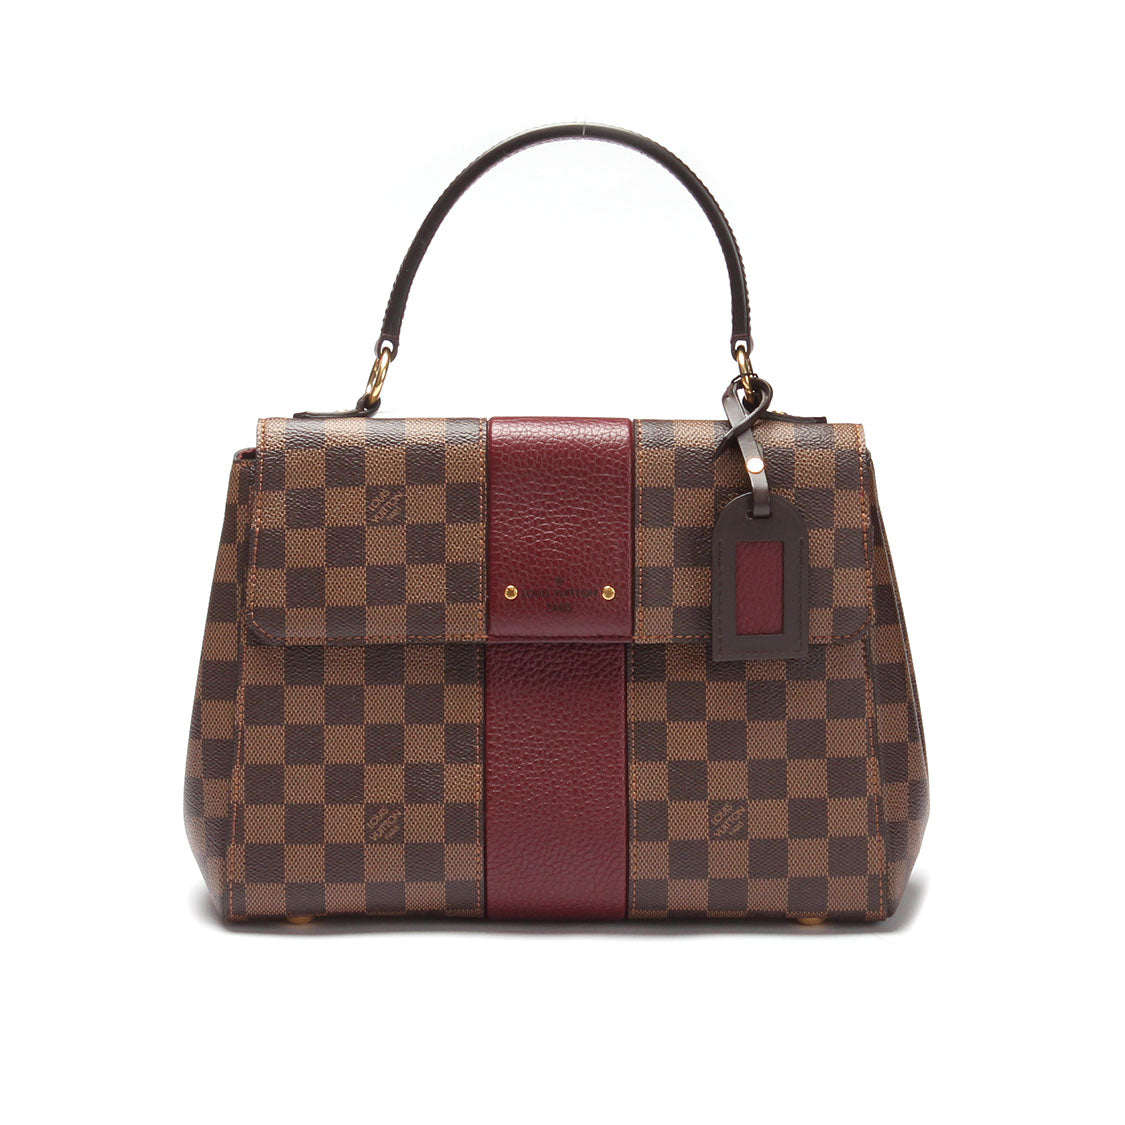 Louis Vuitton Damier Ebene Bond Street Canvas Handbag in Excellent condition